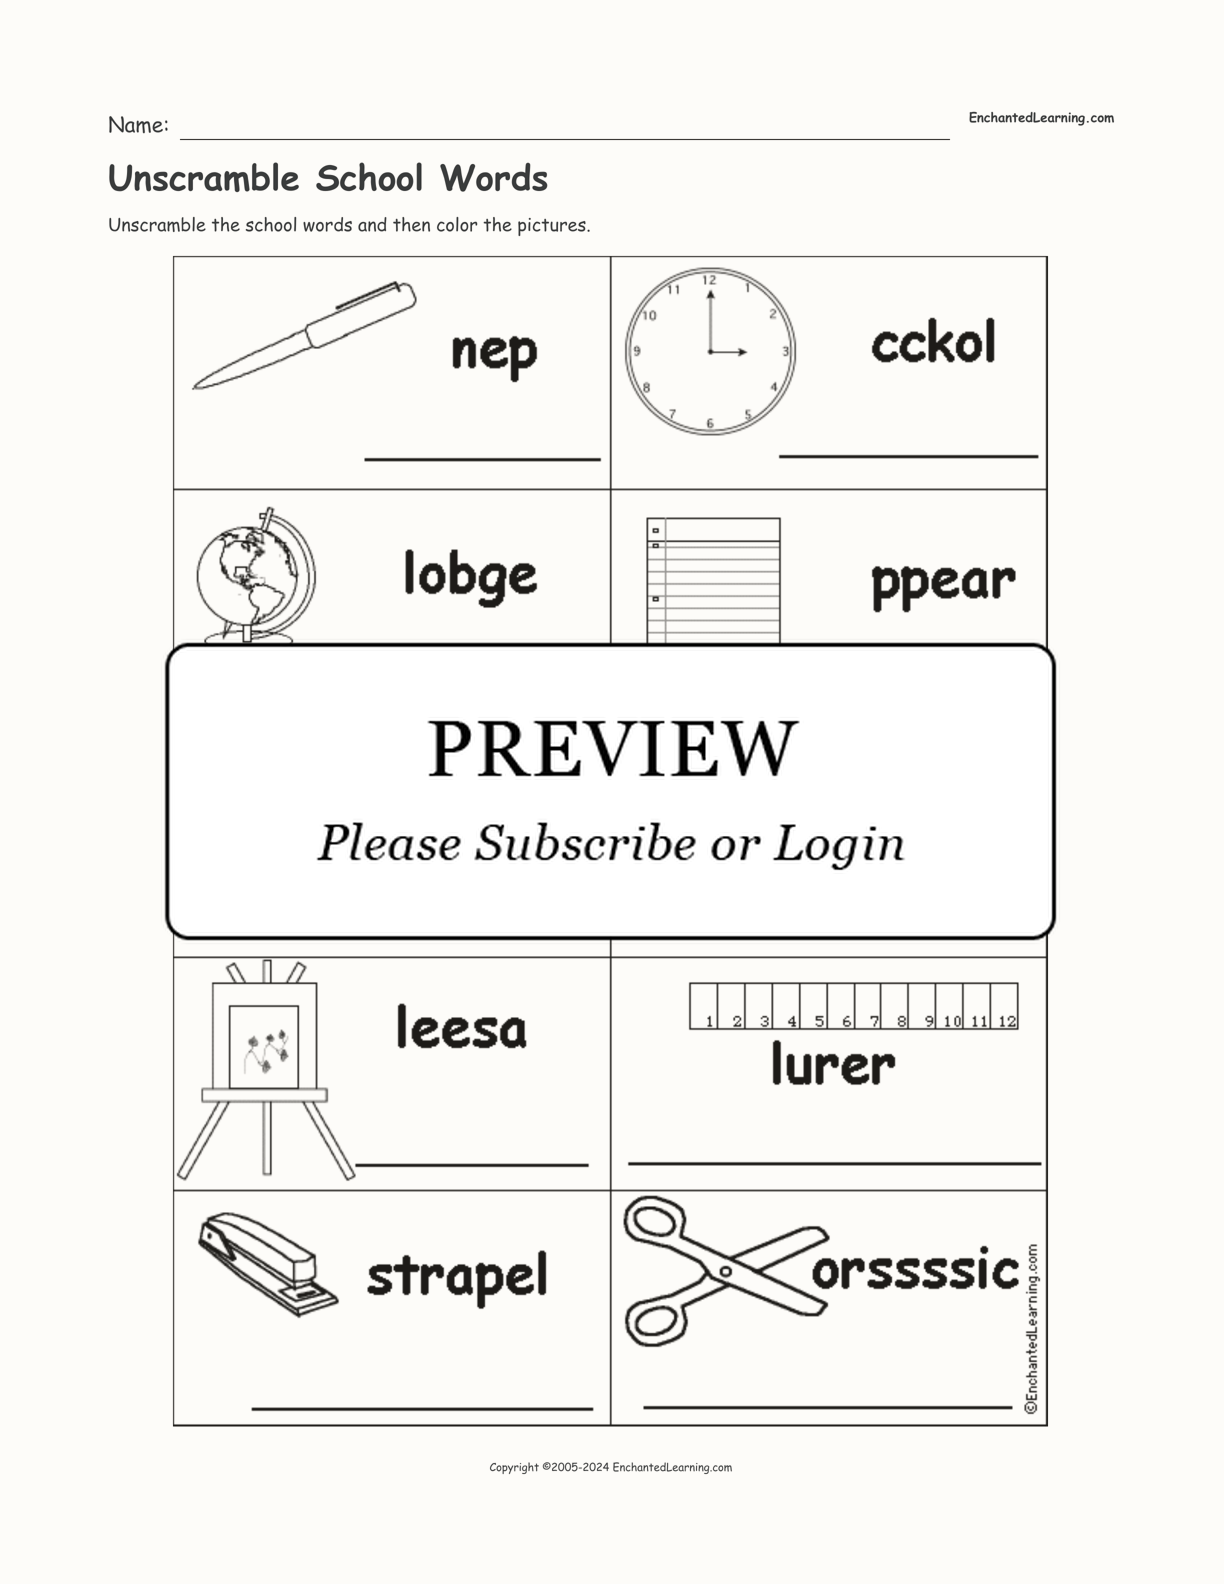 Unscramble School Words interactive worksheet page 1